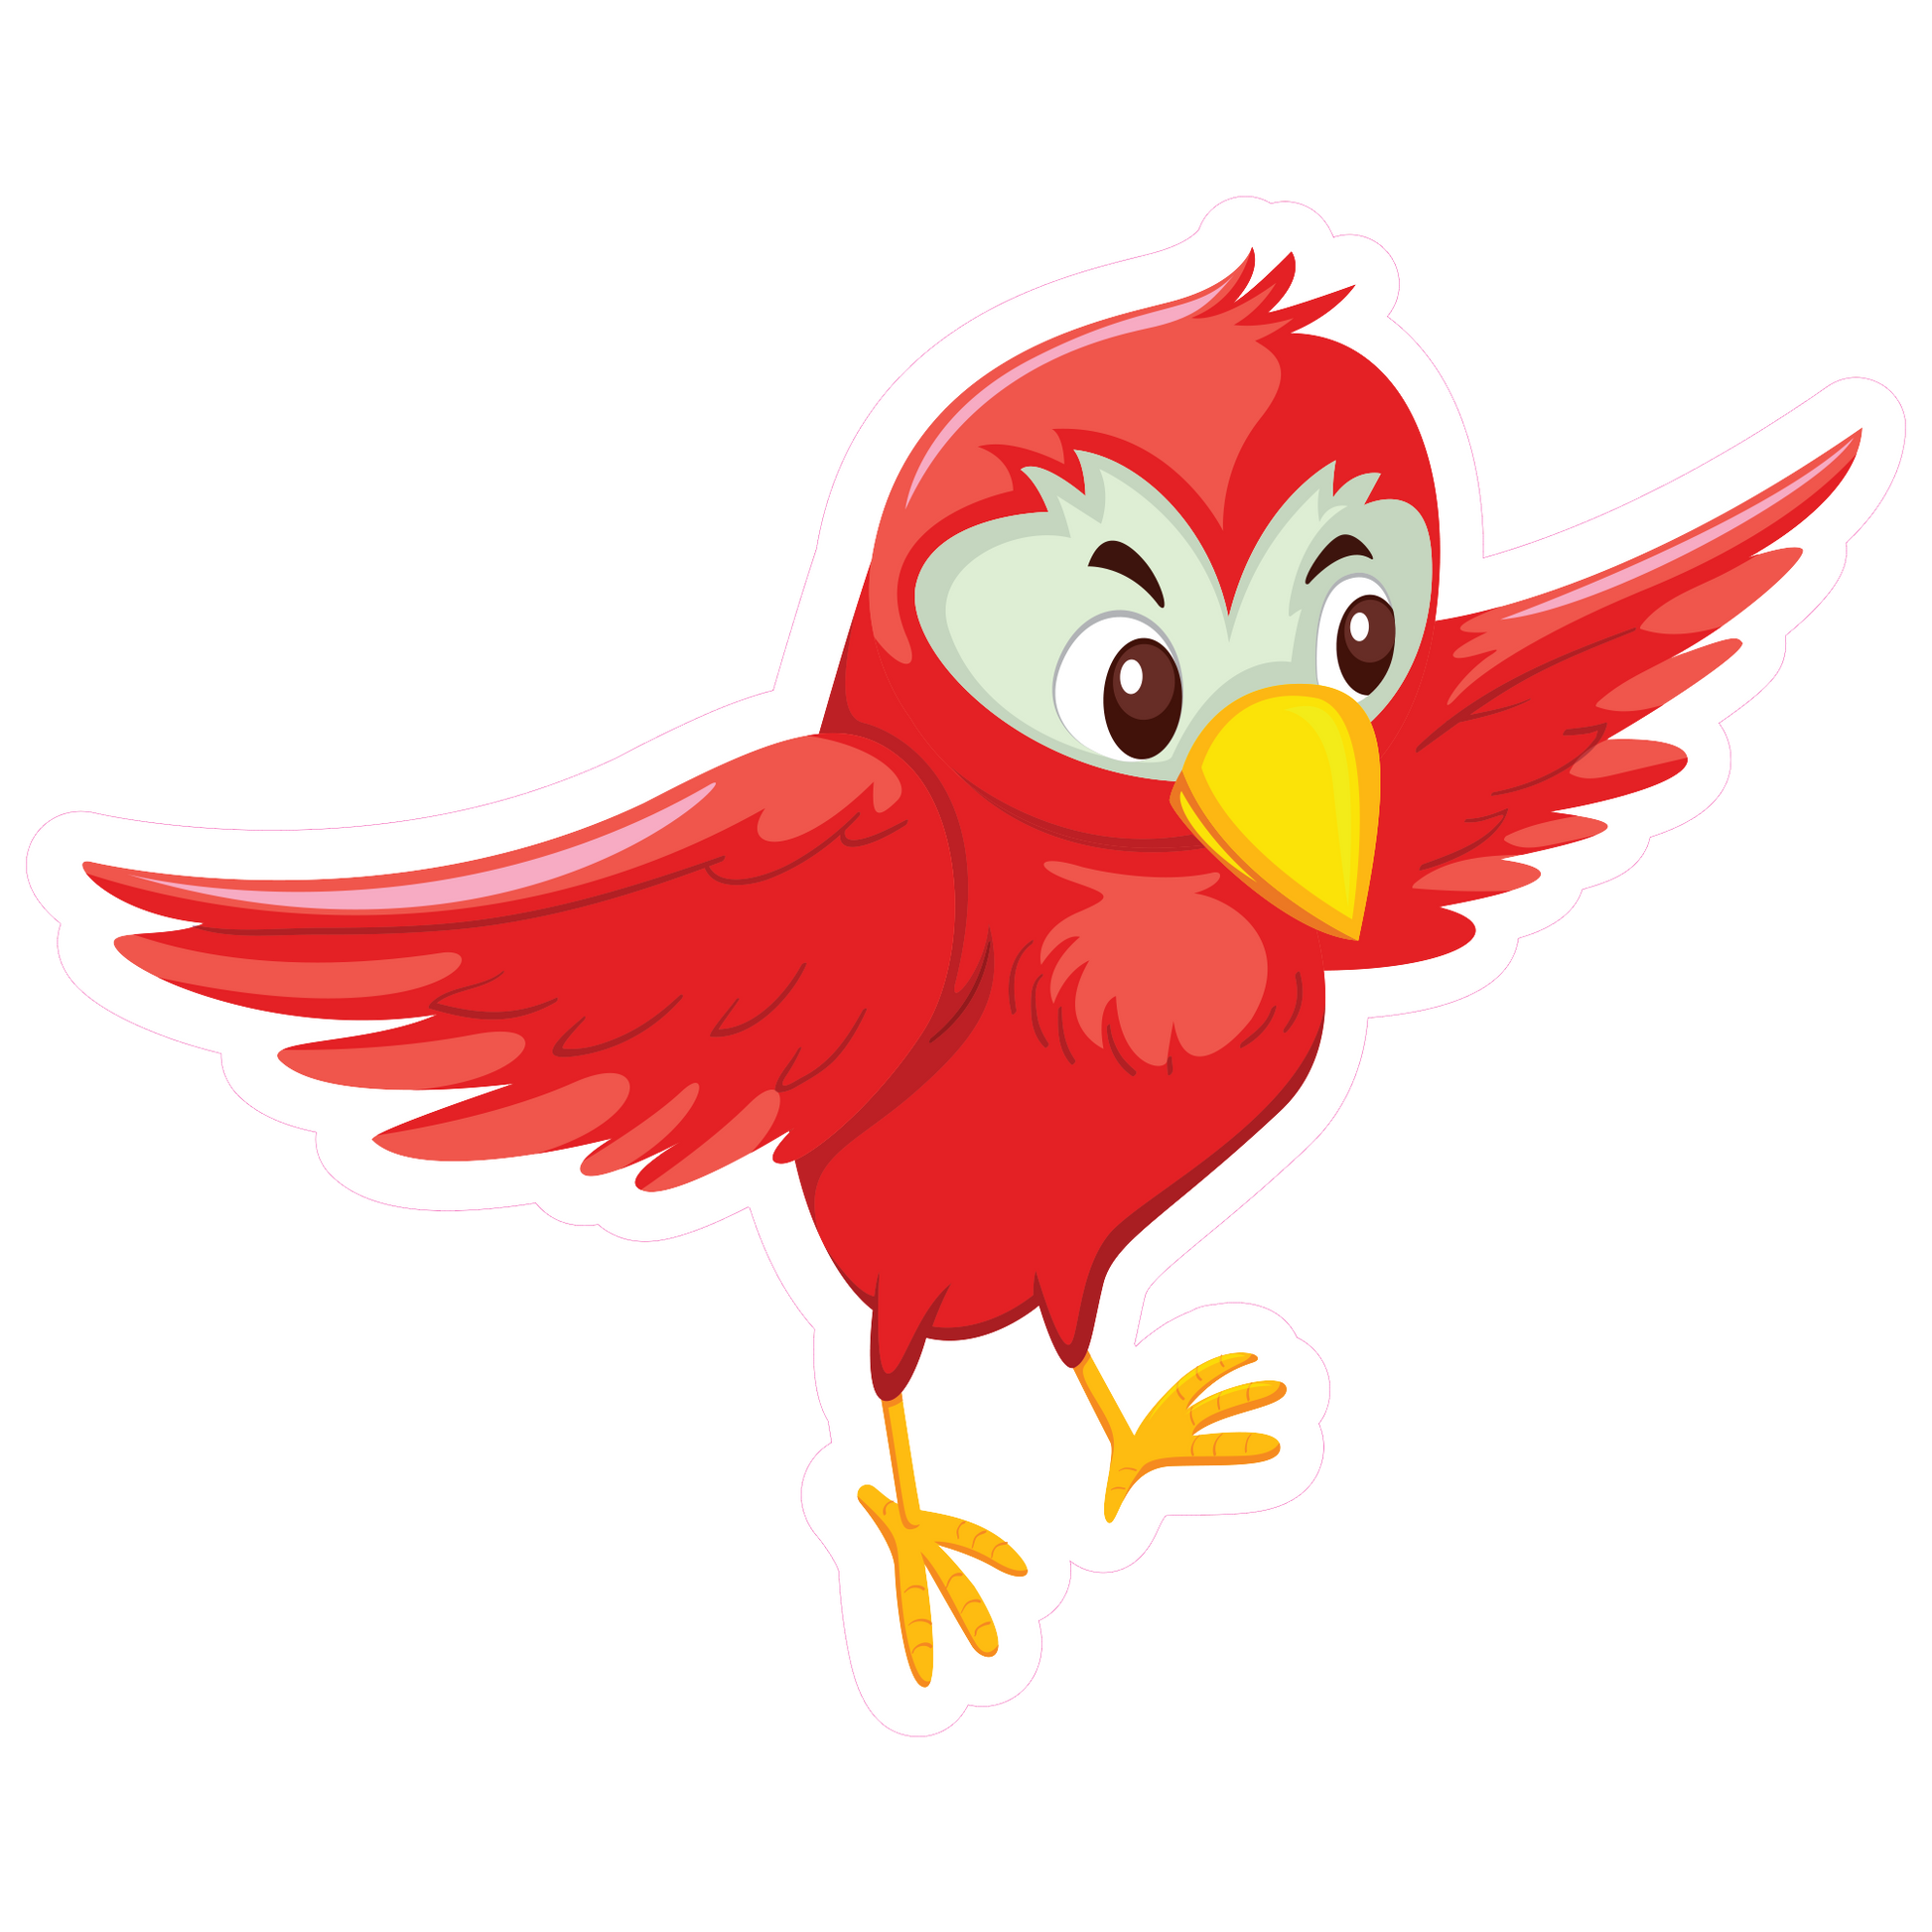 Cute Red Bird Sticker - Animal Decal